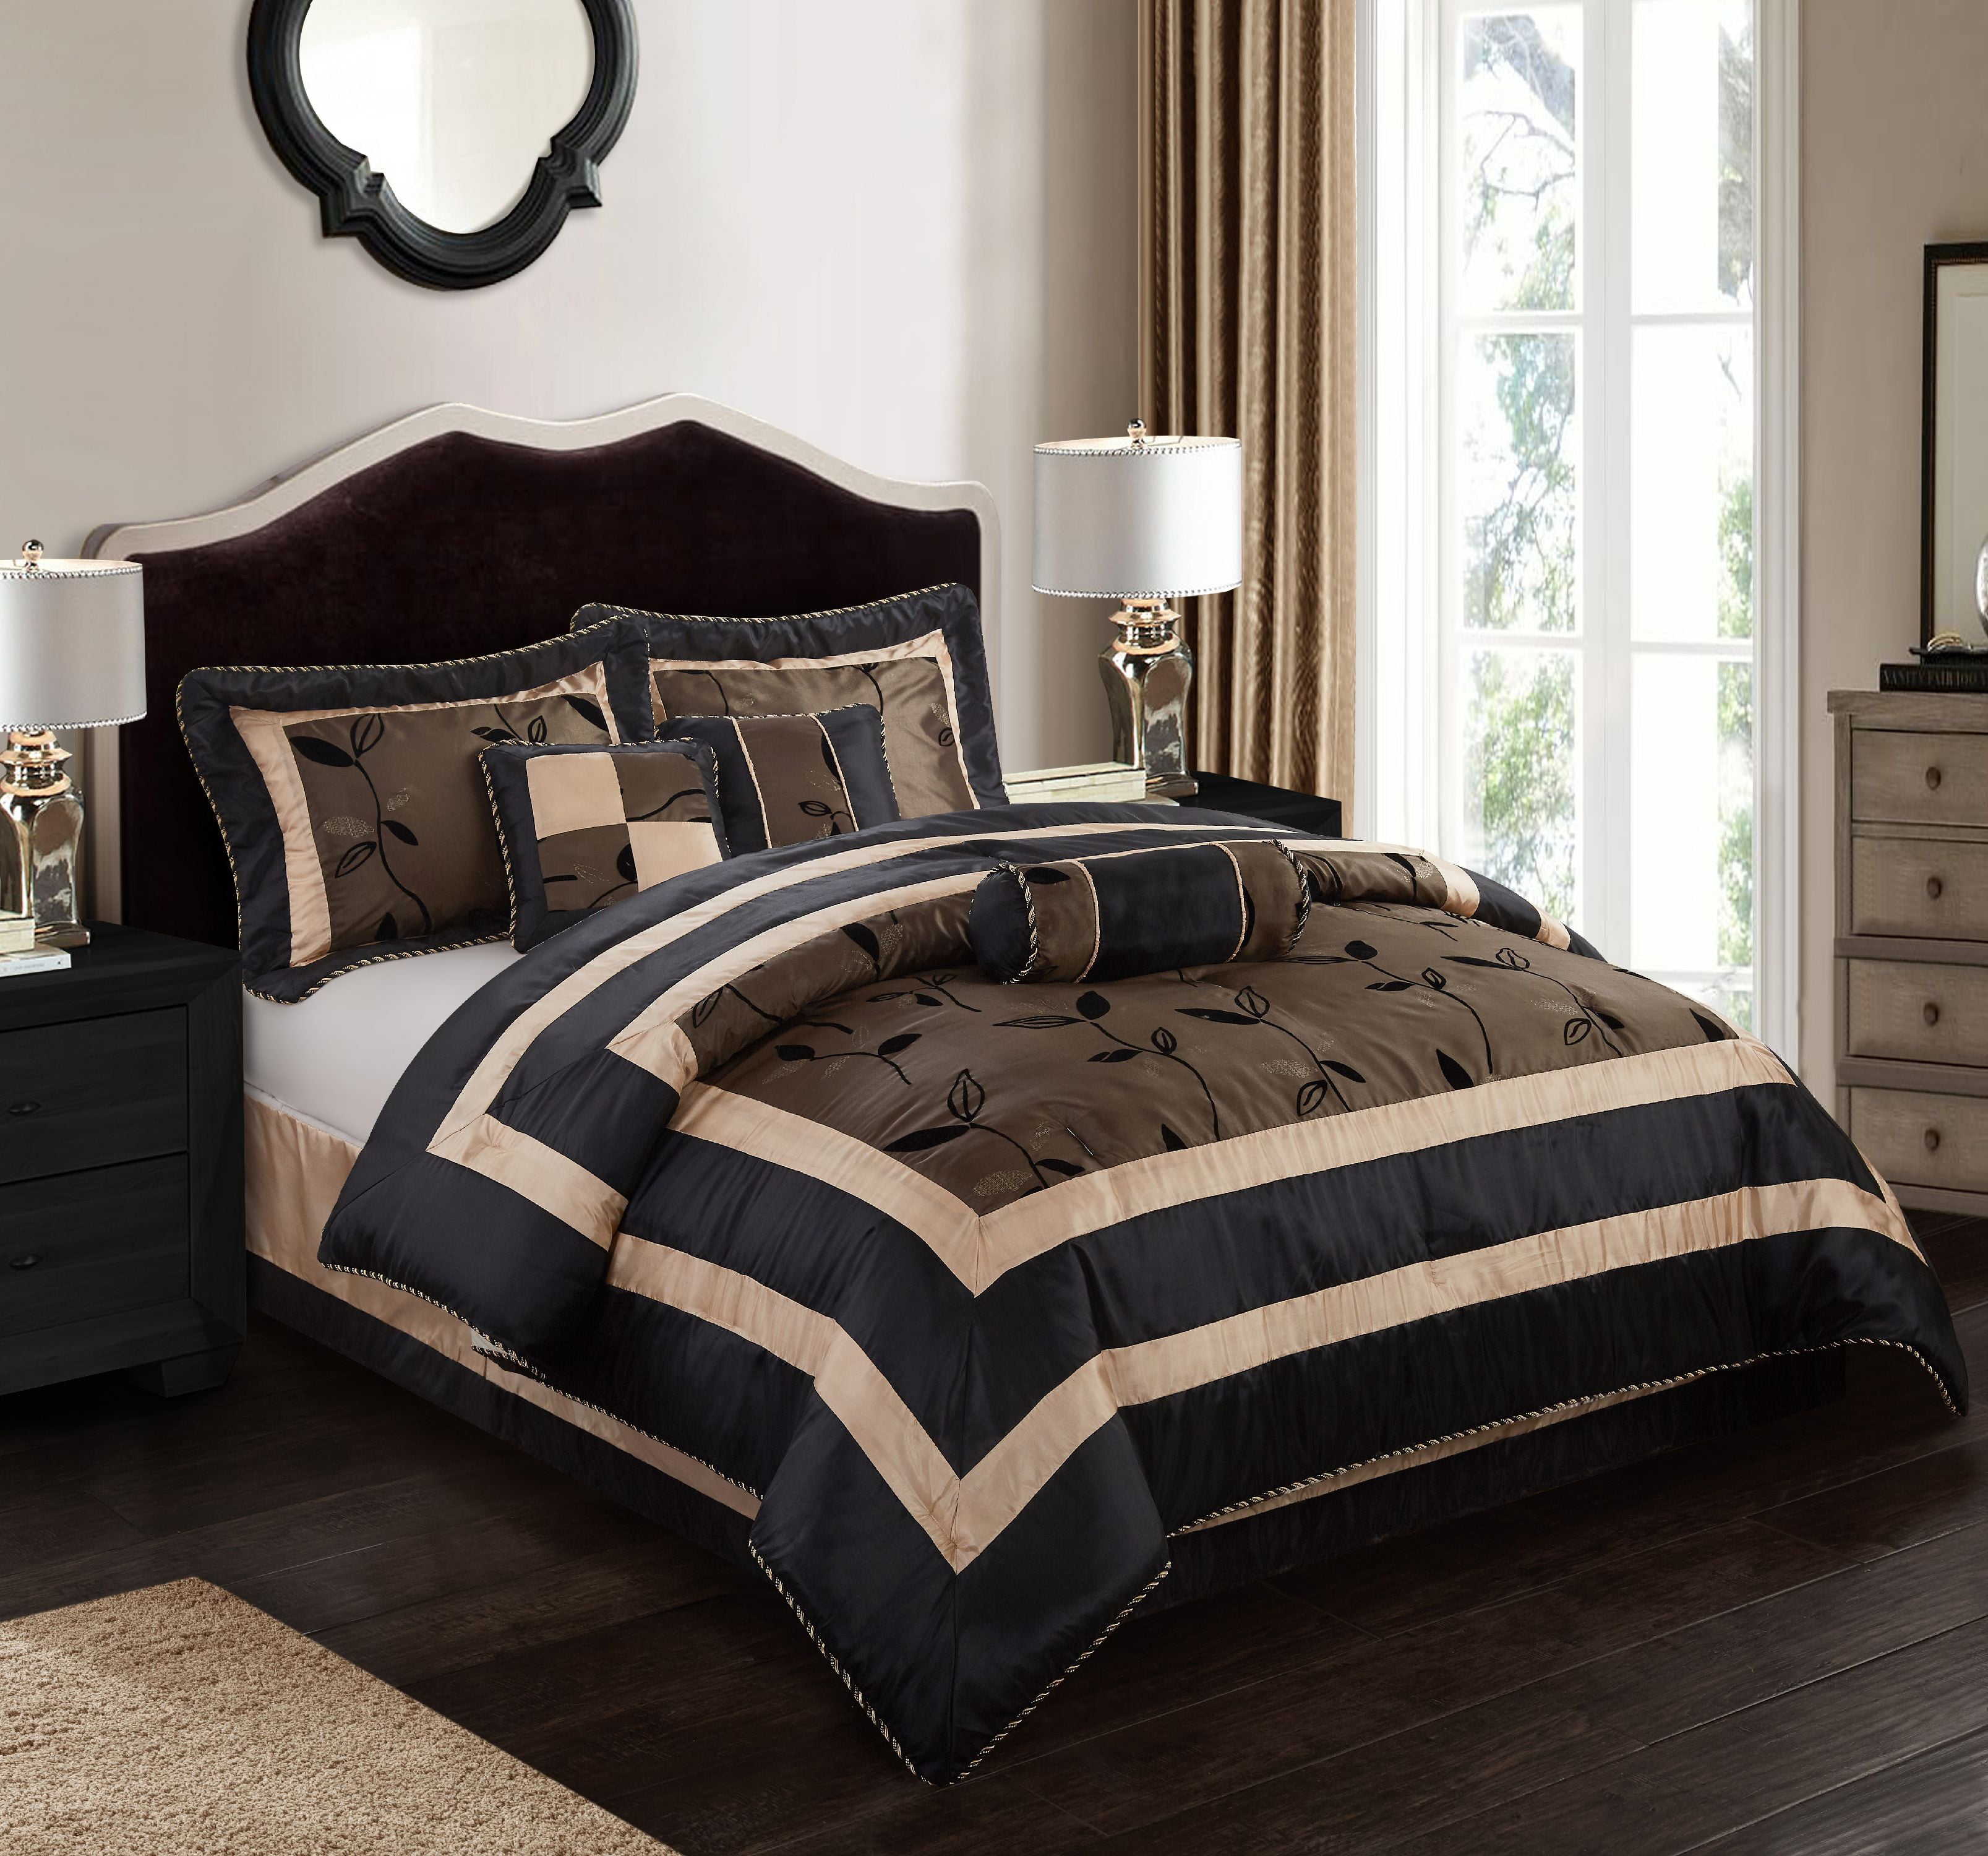 Luxurious Black Gold 7 pcs Jacquard Comforter Bedding Cal King Queen Set 